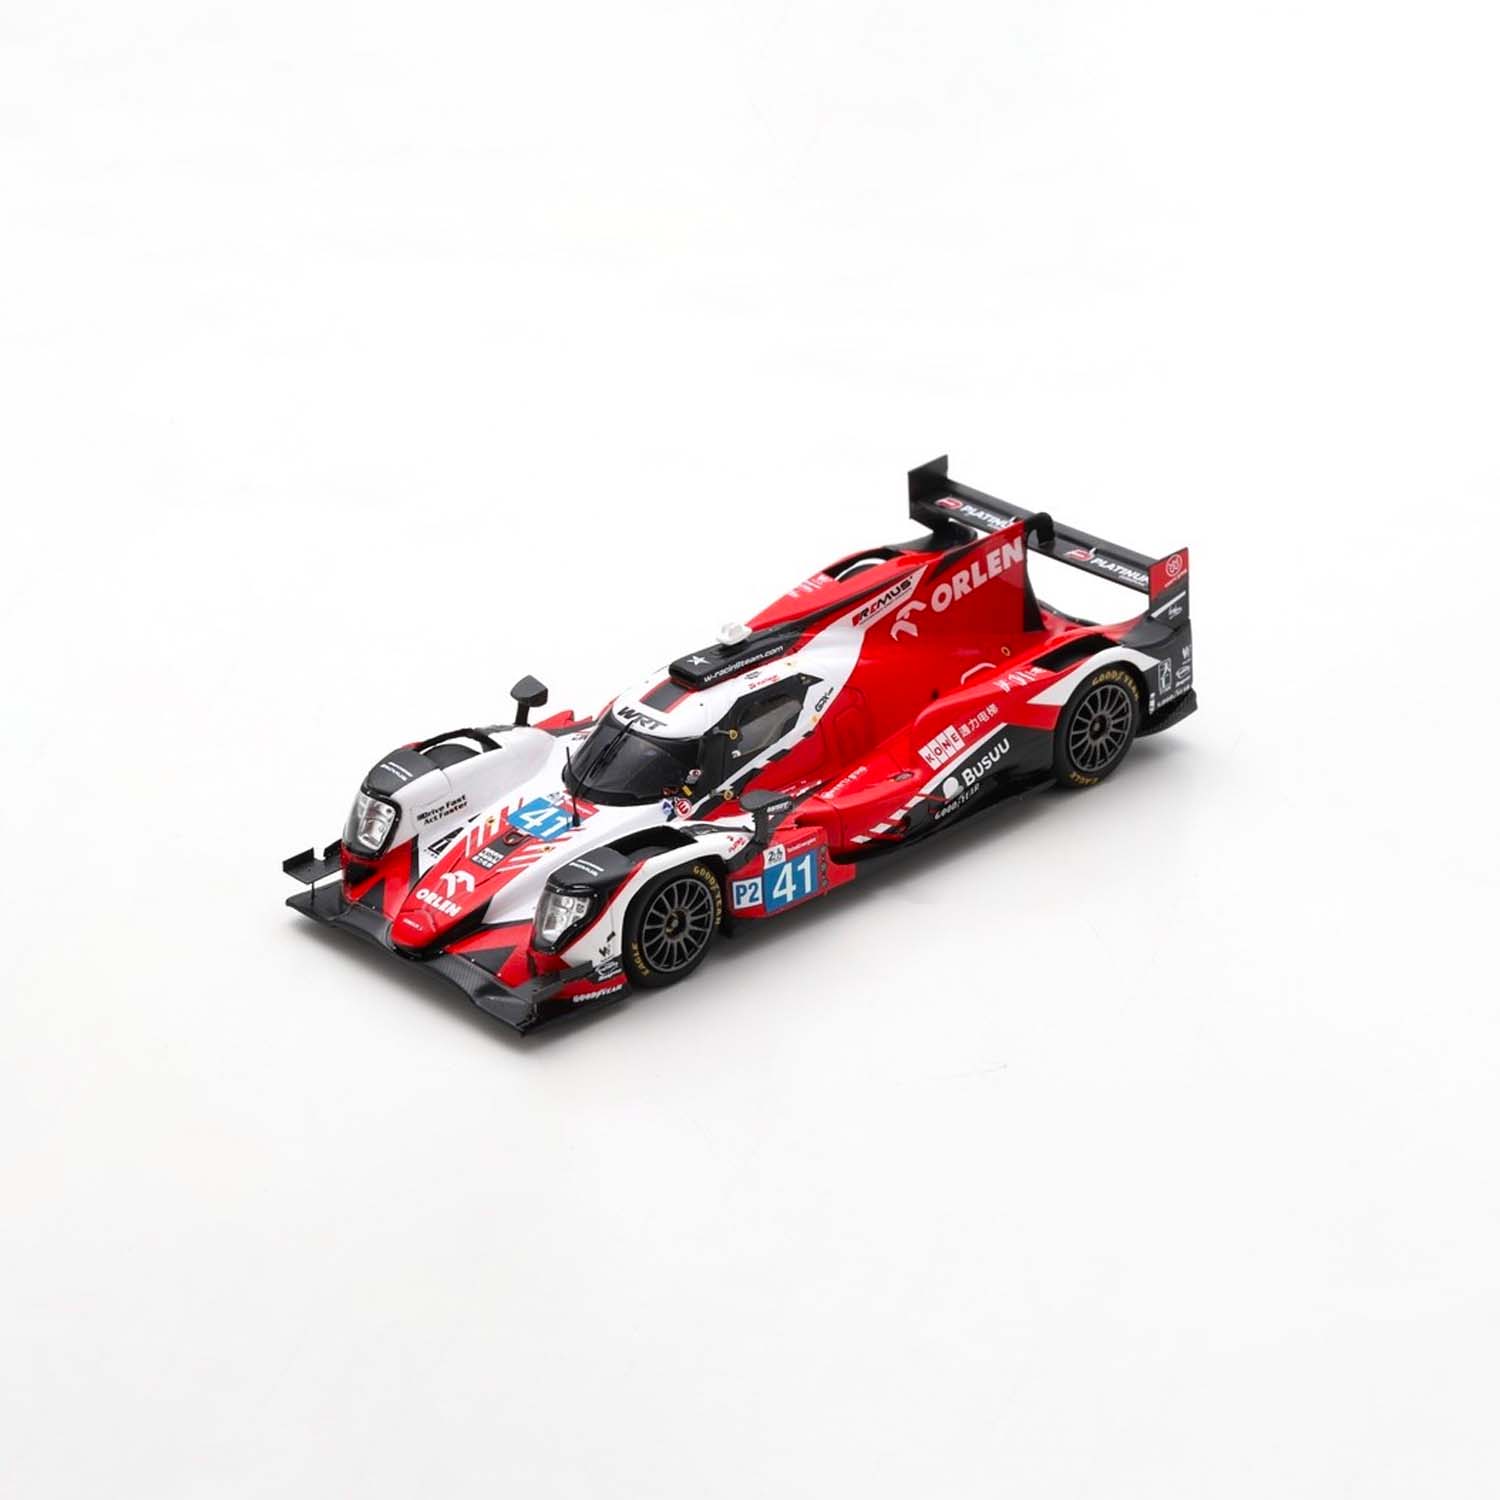 Oreca 07 Team WRT 24H Le Mans 2021 | 1:43 Scale Model-1:43 Scale Model-Spark Models-gpx-store